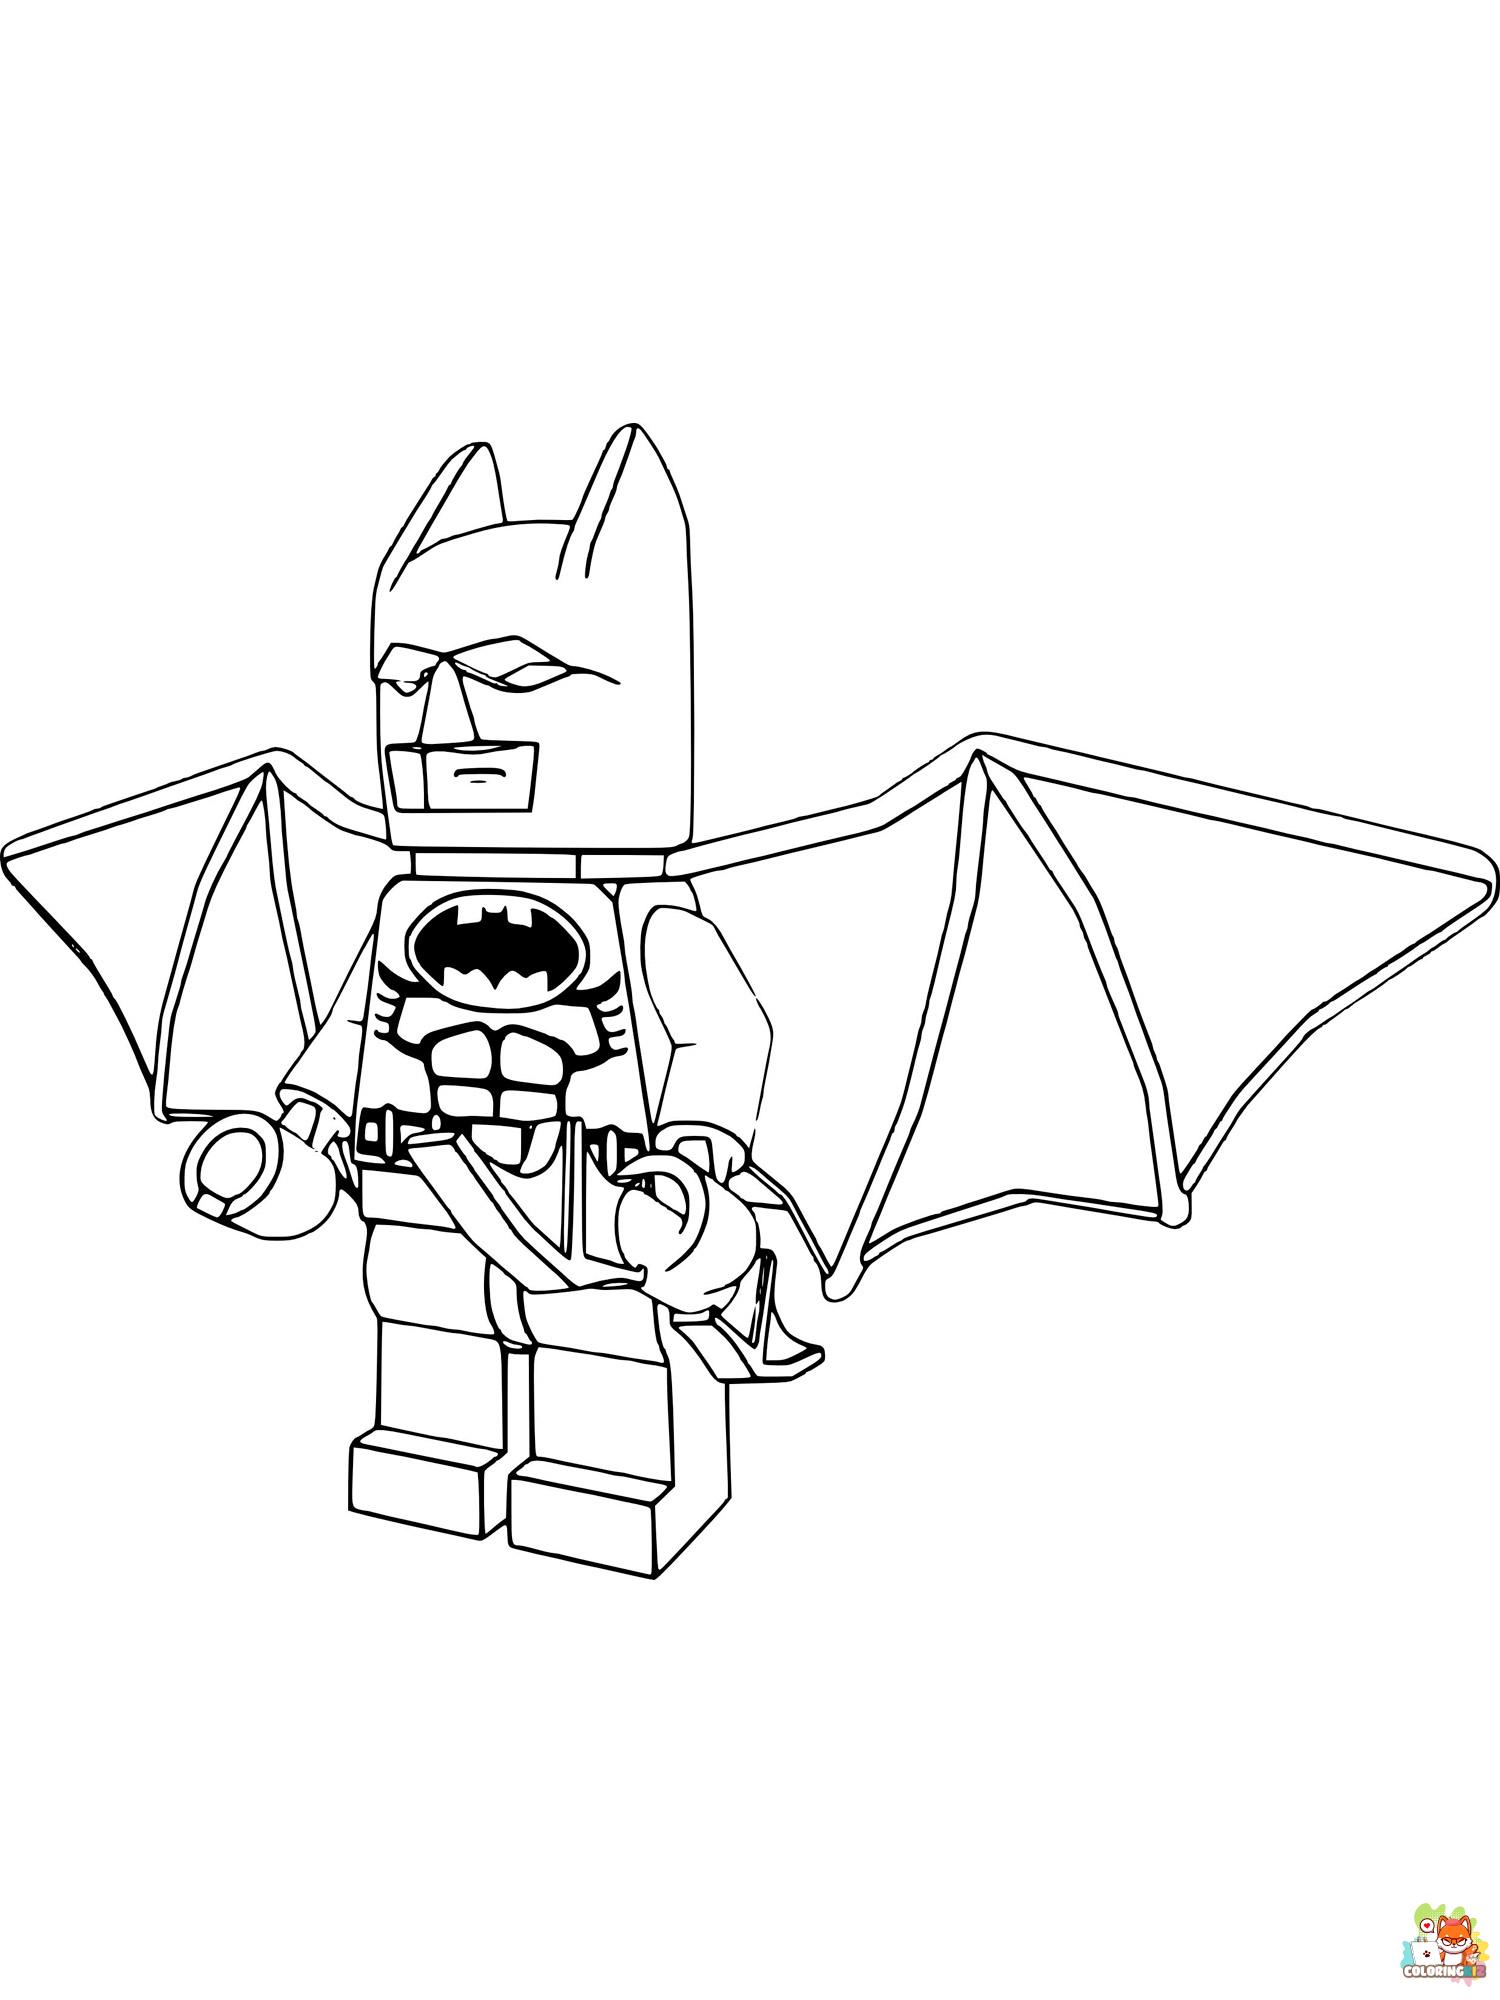 Lego Batman Coloring Pages easy 2